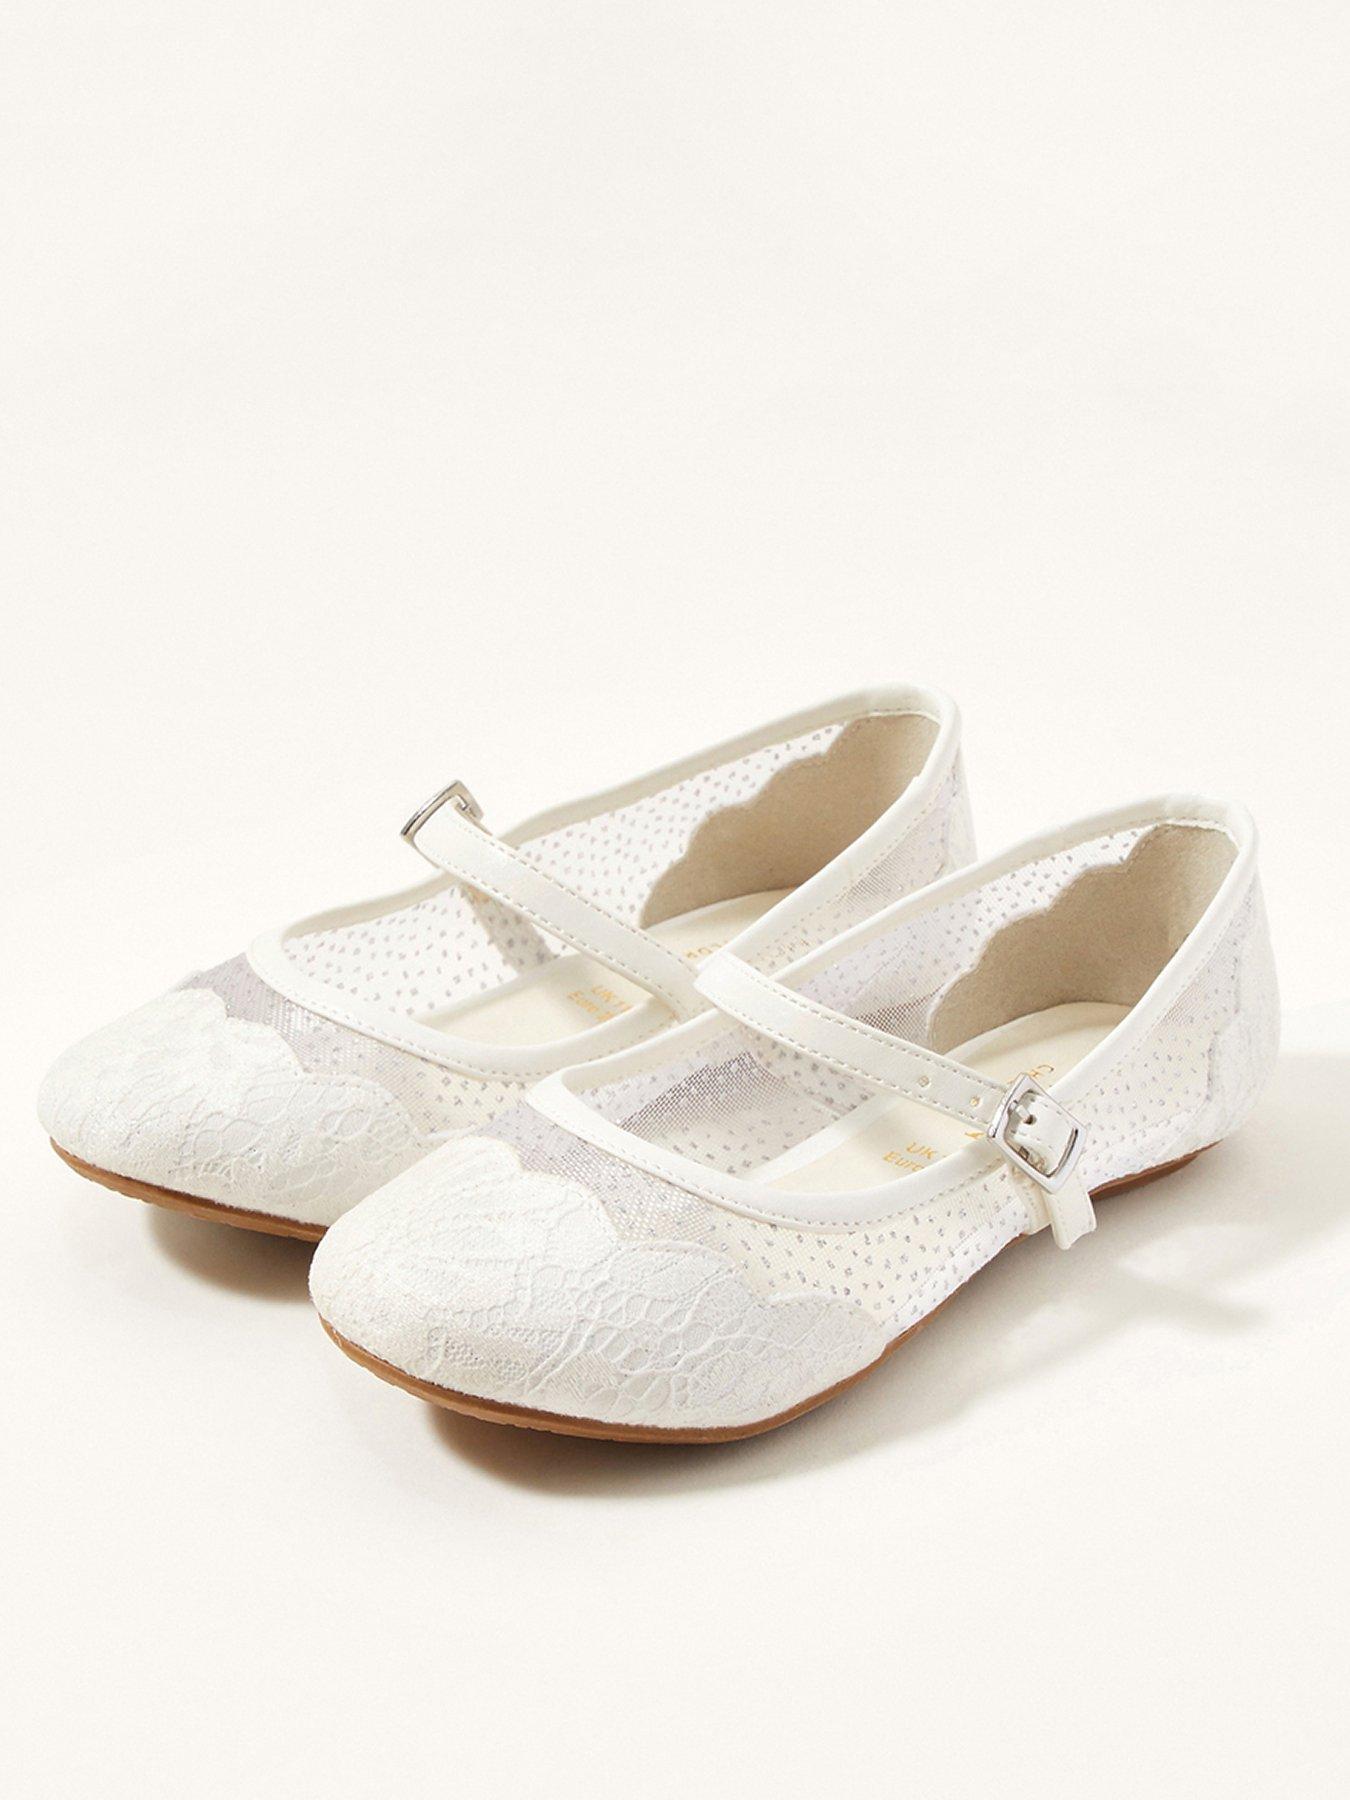 Girls Summer Sandals White PInk Flat Flower Touch fastening All Size 